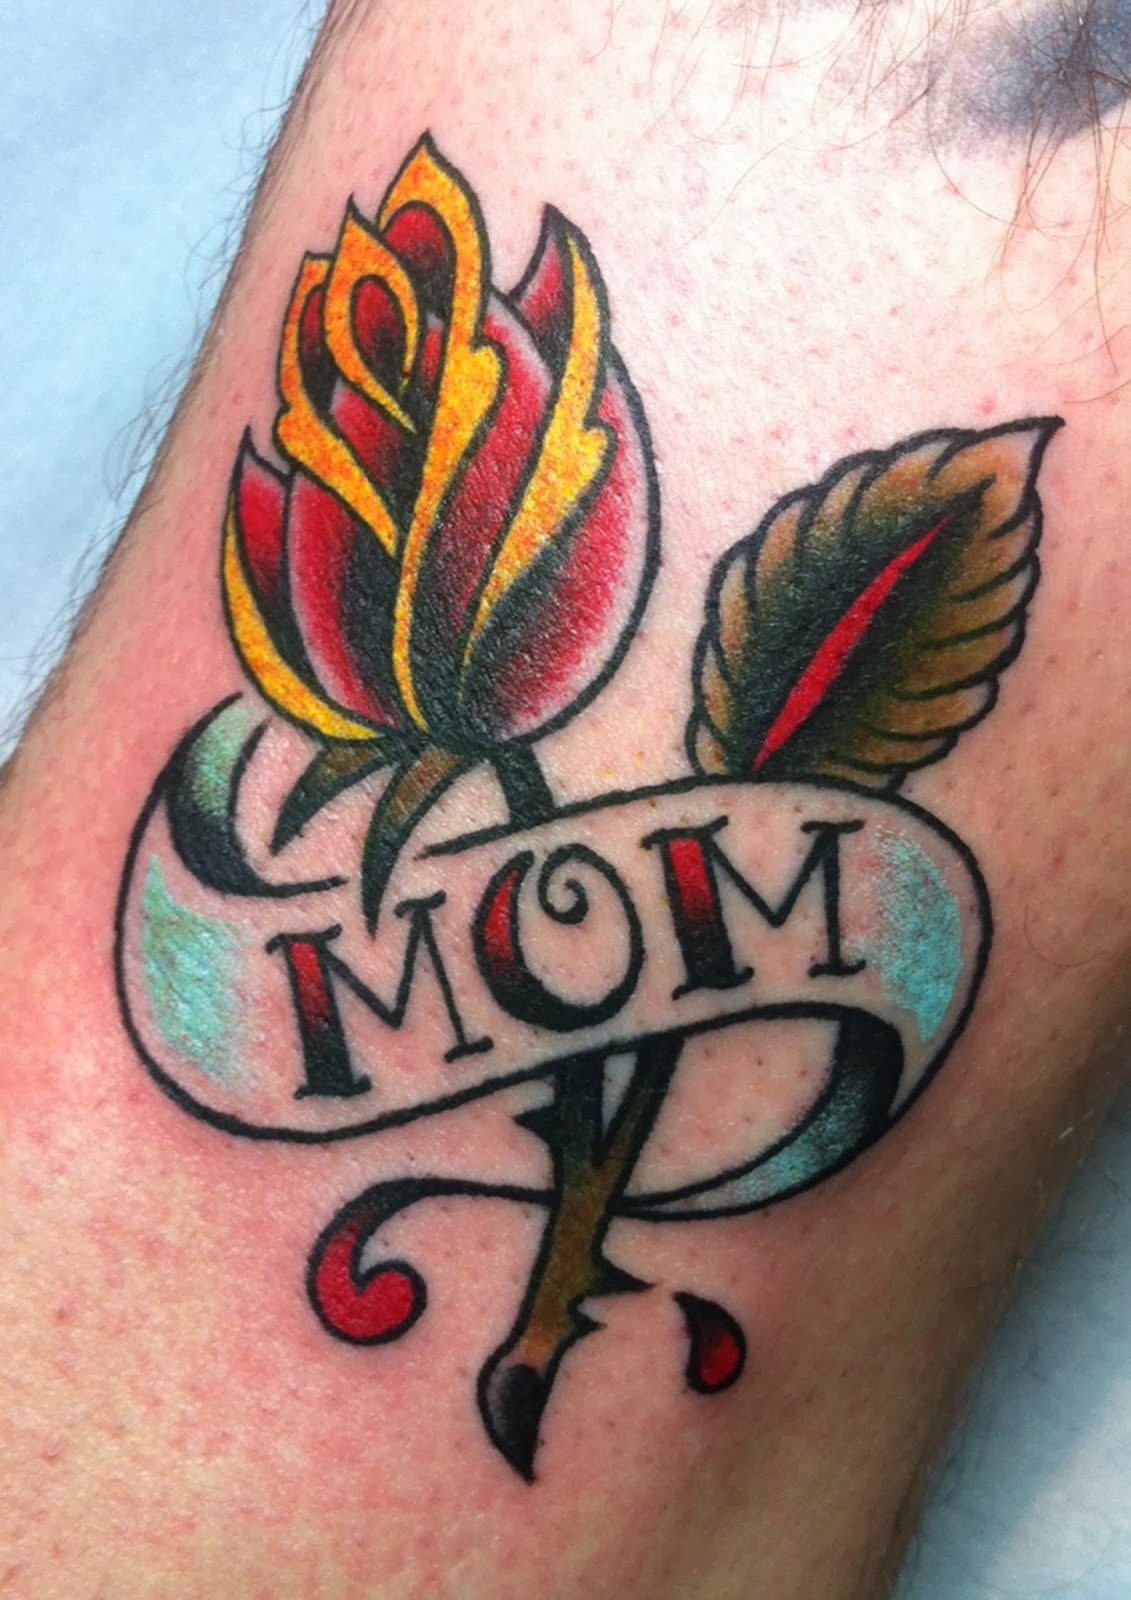 Mom rose tattoo meaning,images of eyeliner tattoo edmonton,tattoos designs...